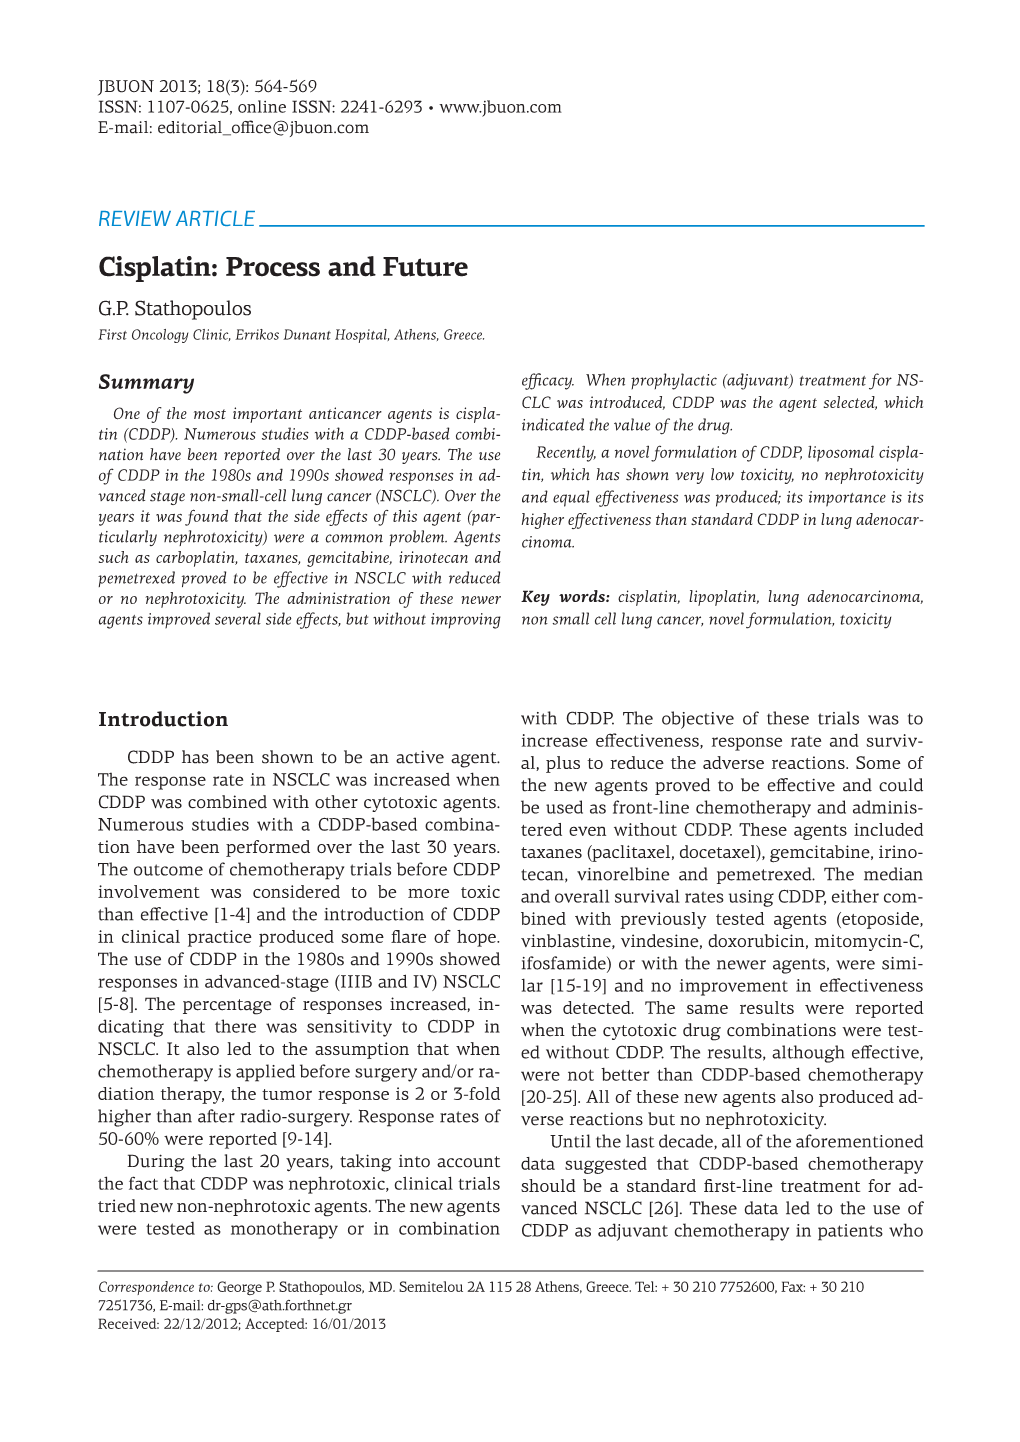 Cisplatin: Process and Future G.P